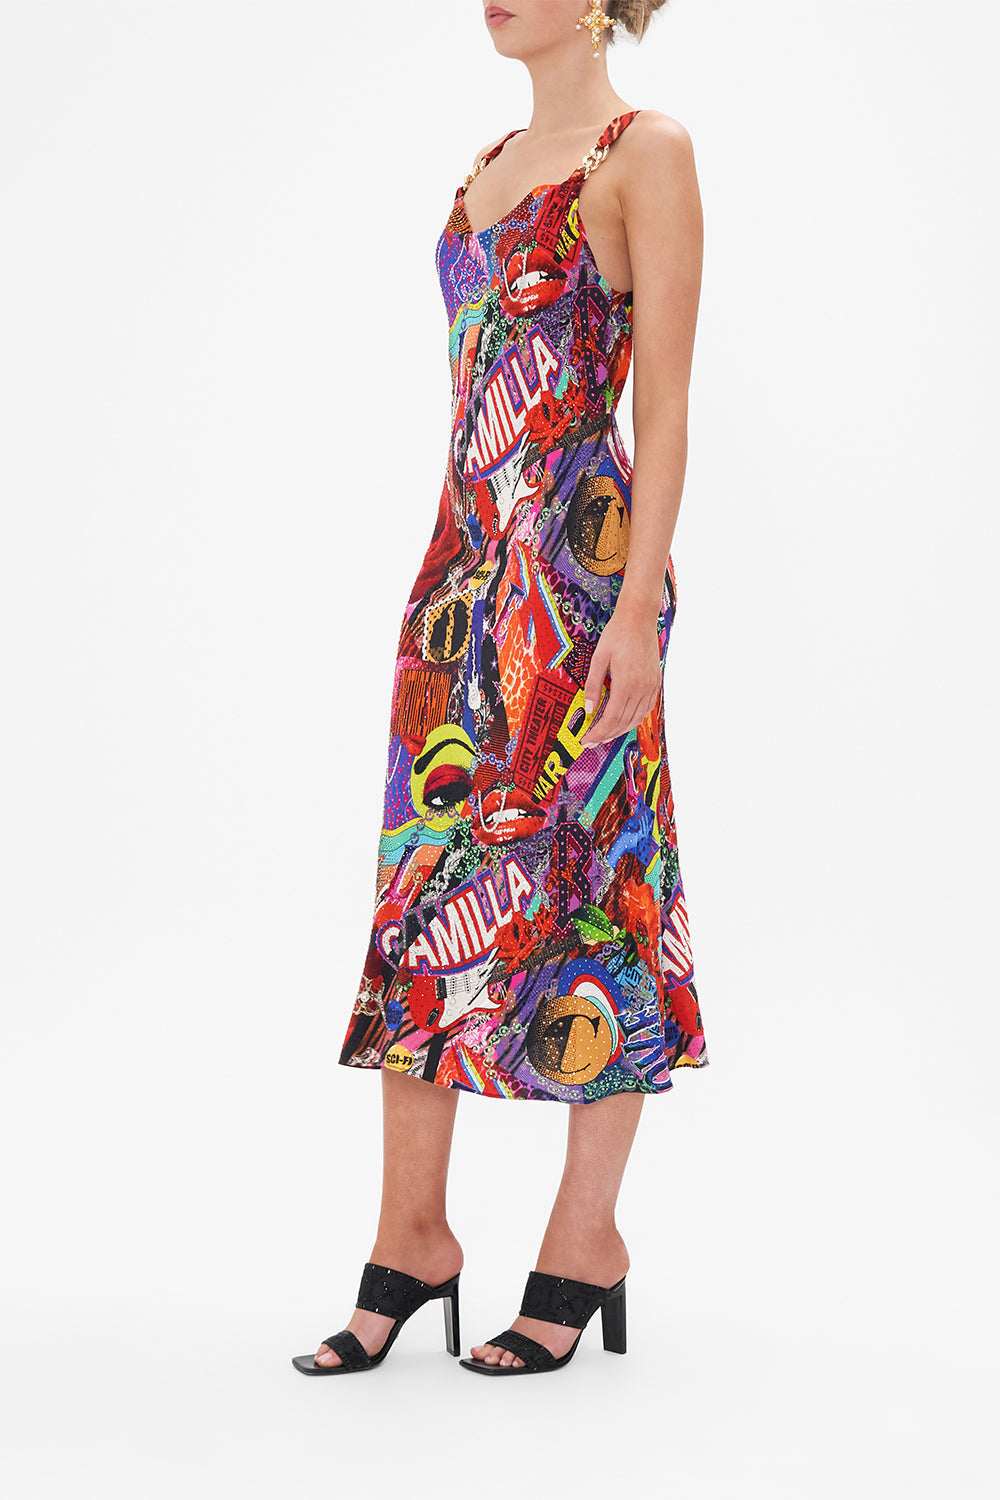 Side view of model wearing CAMILLA bias silk slip dress in multicoloured Radical Rebirth print